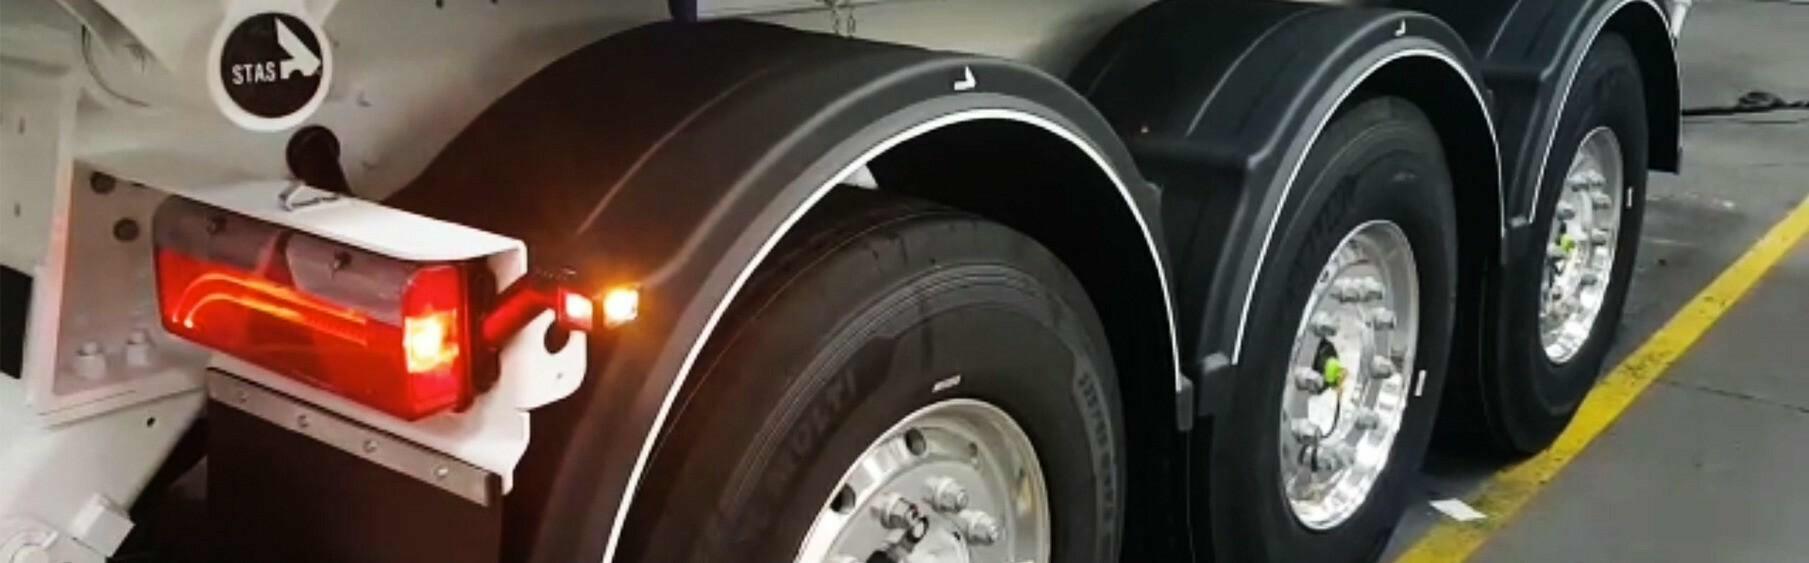 STAS trailers even safer thanks to marker lights